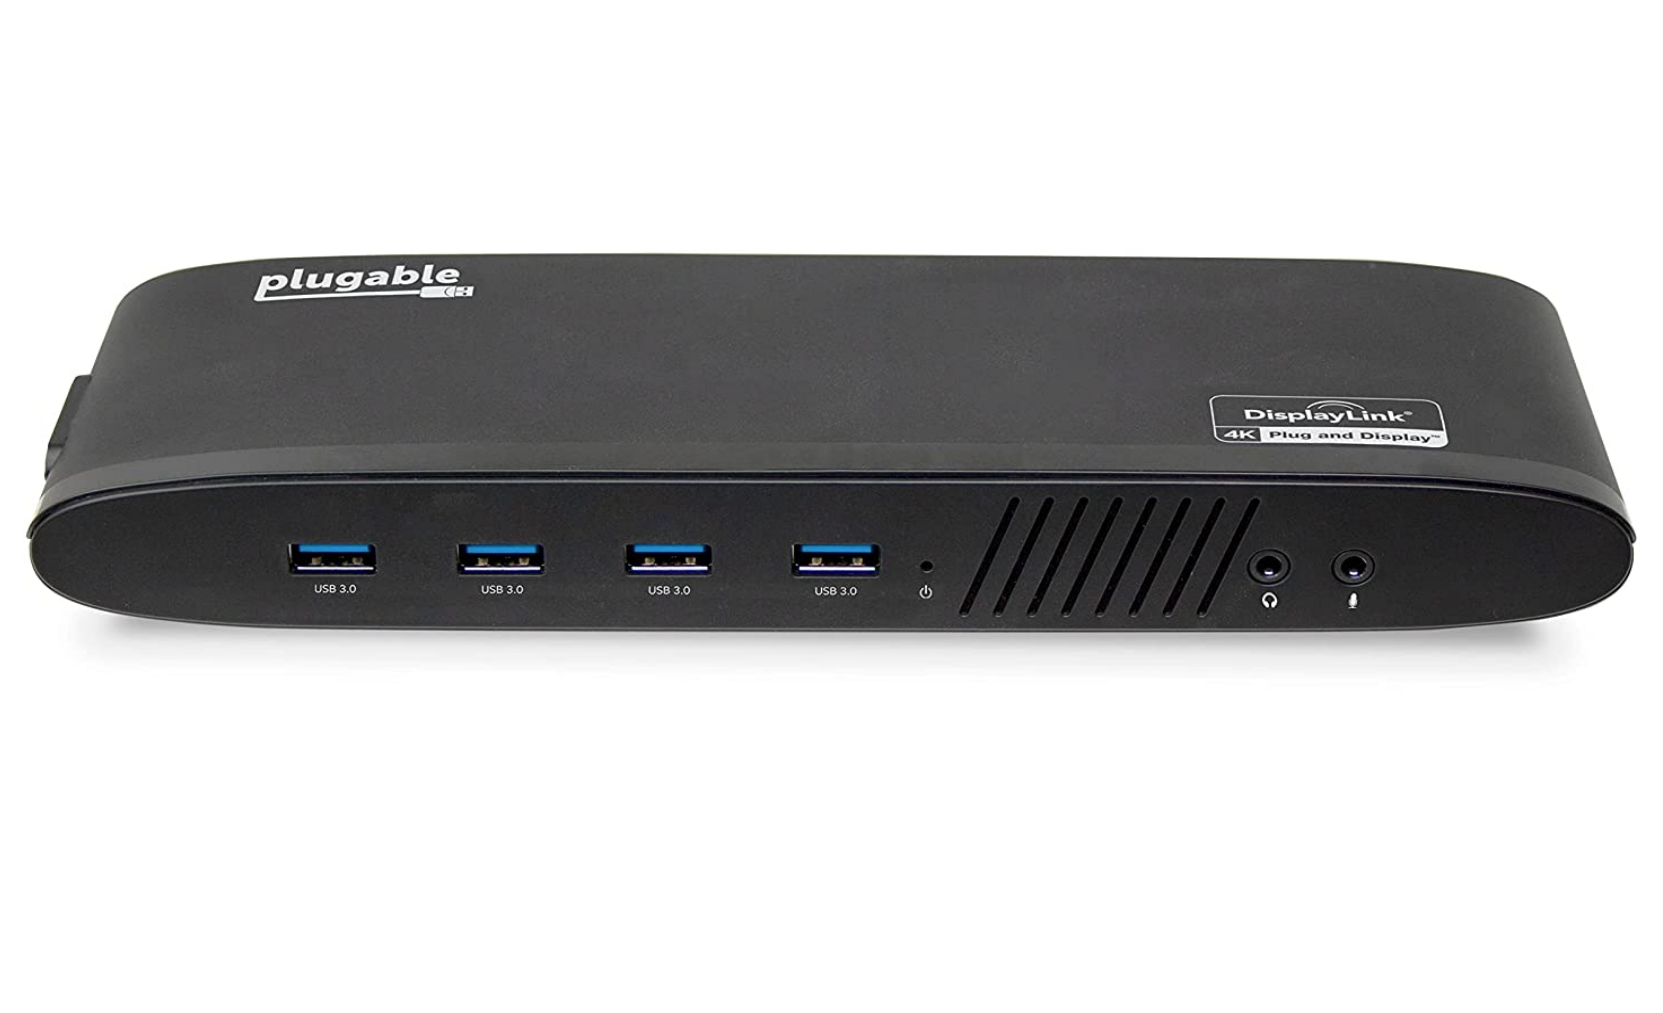 Plugable UD-6950H USB 3.0 Dual 4K Docking Station - Best full-size USB-C dock runner-up